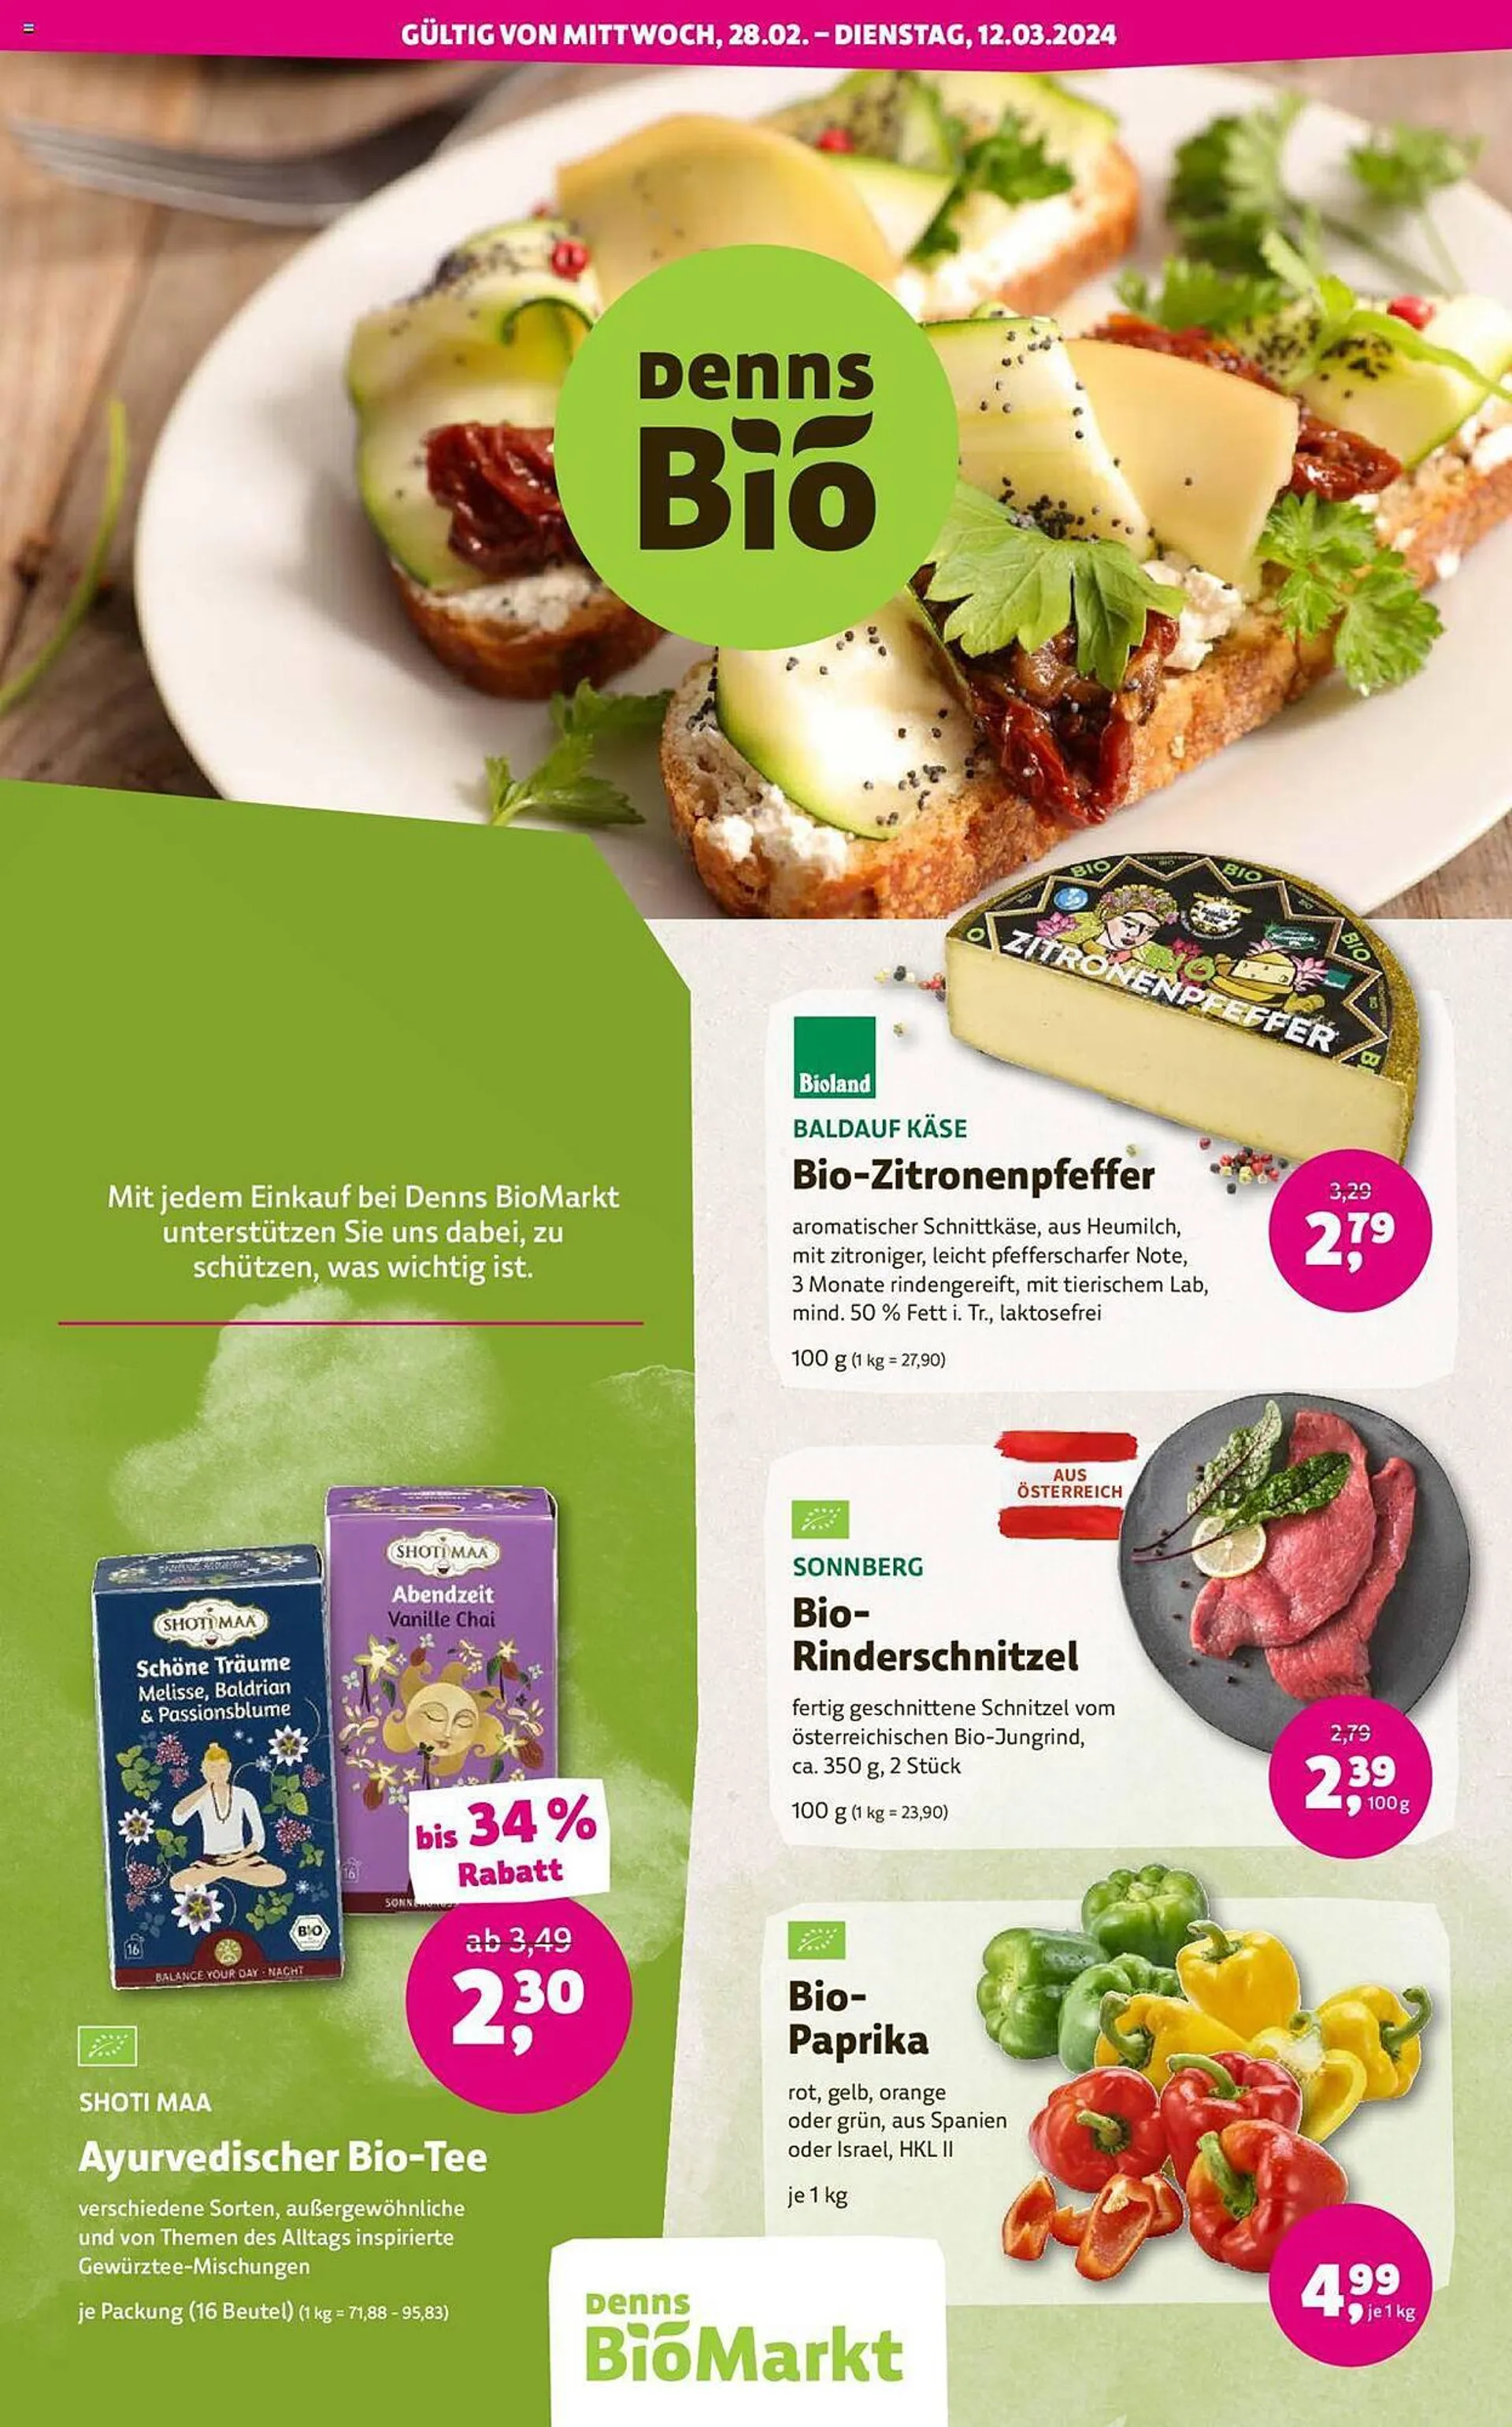 Denn's Biomarkt Flugblatt von 28. Februar bis 12. März 2024 - Flugblätt seite  